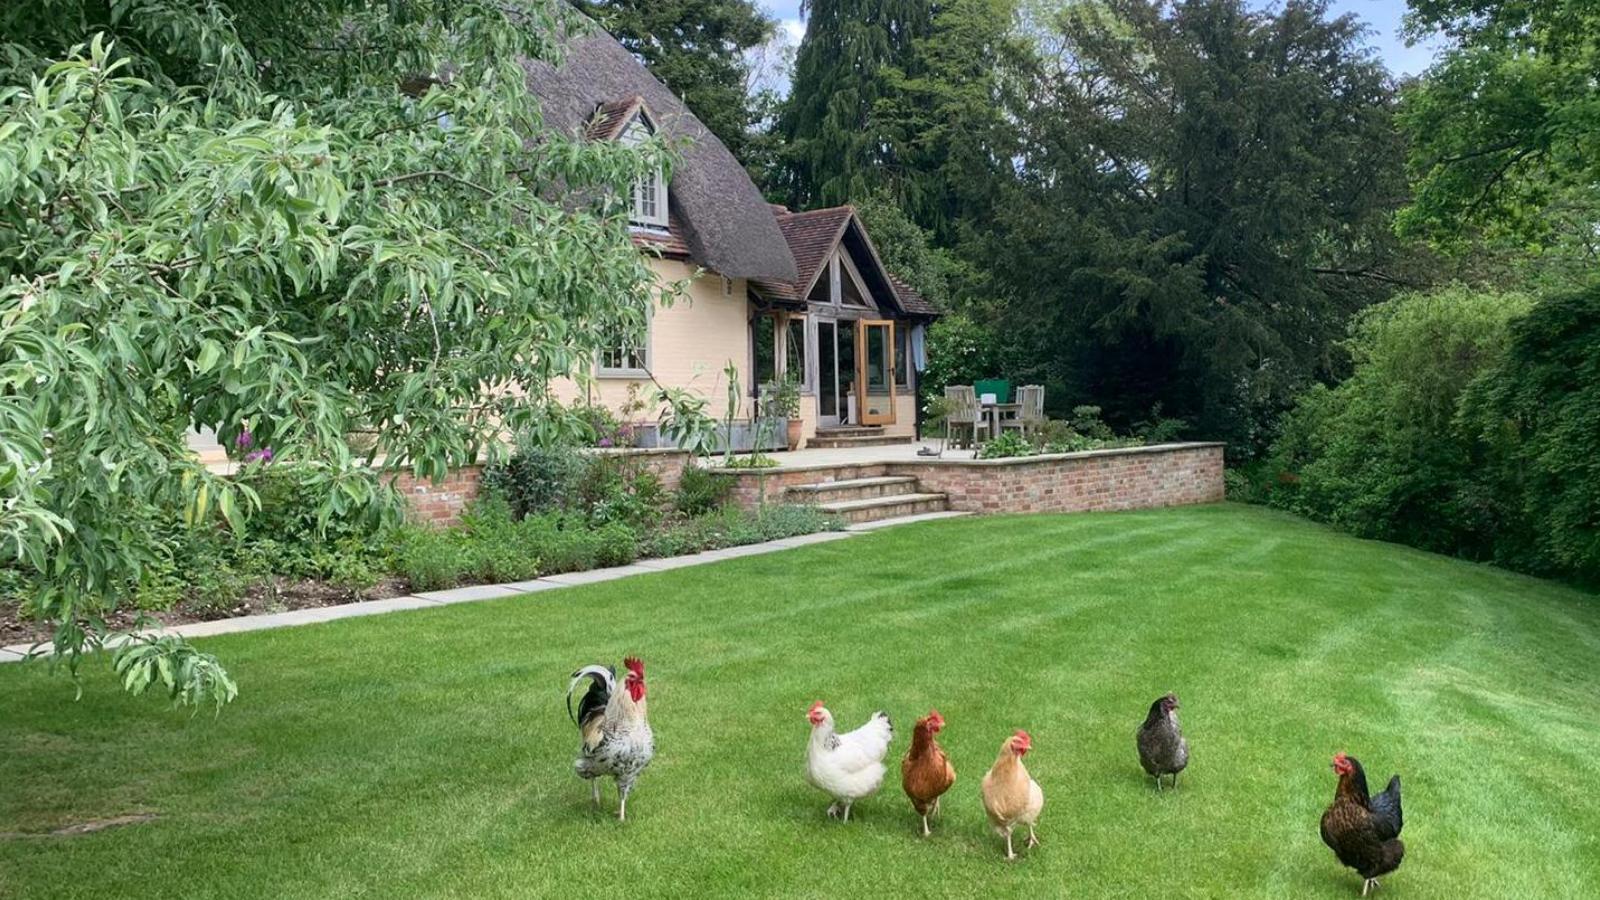 Alison Bockh Garden Design and Landscaping - North Devon - Even the chickens love it